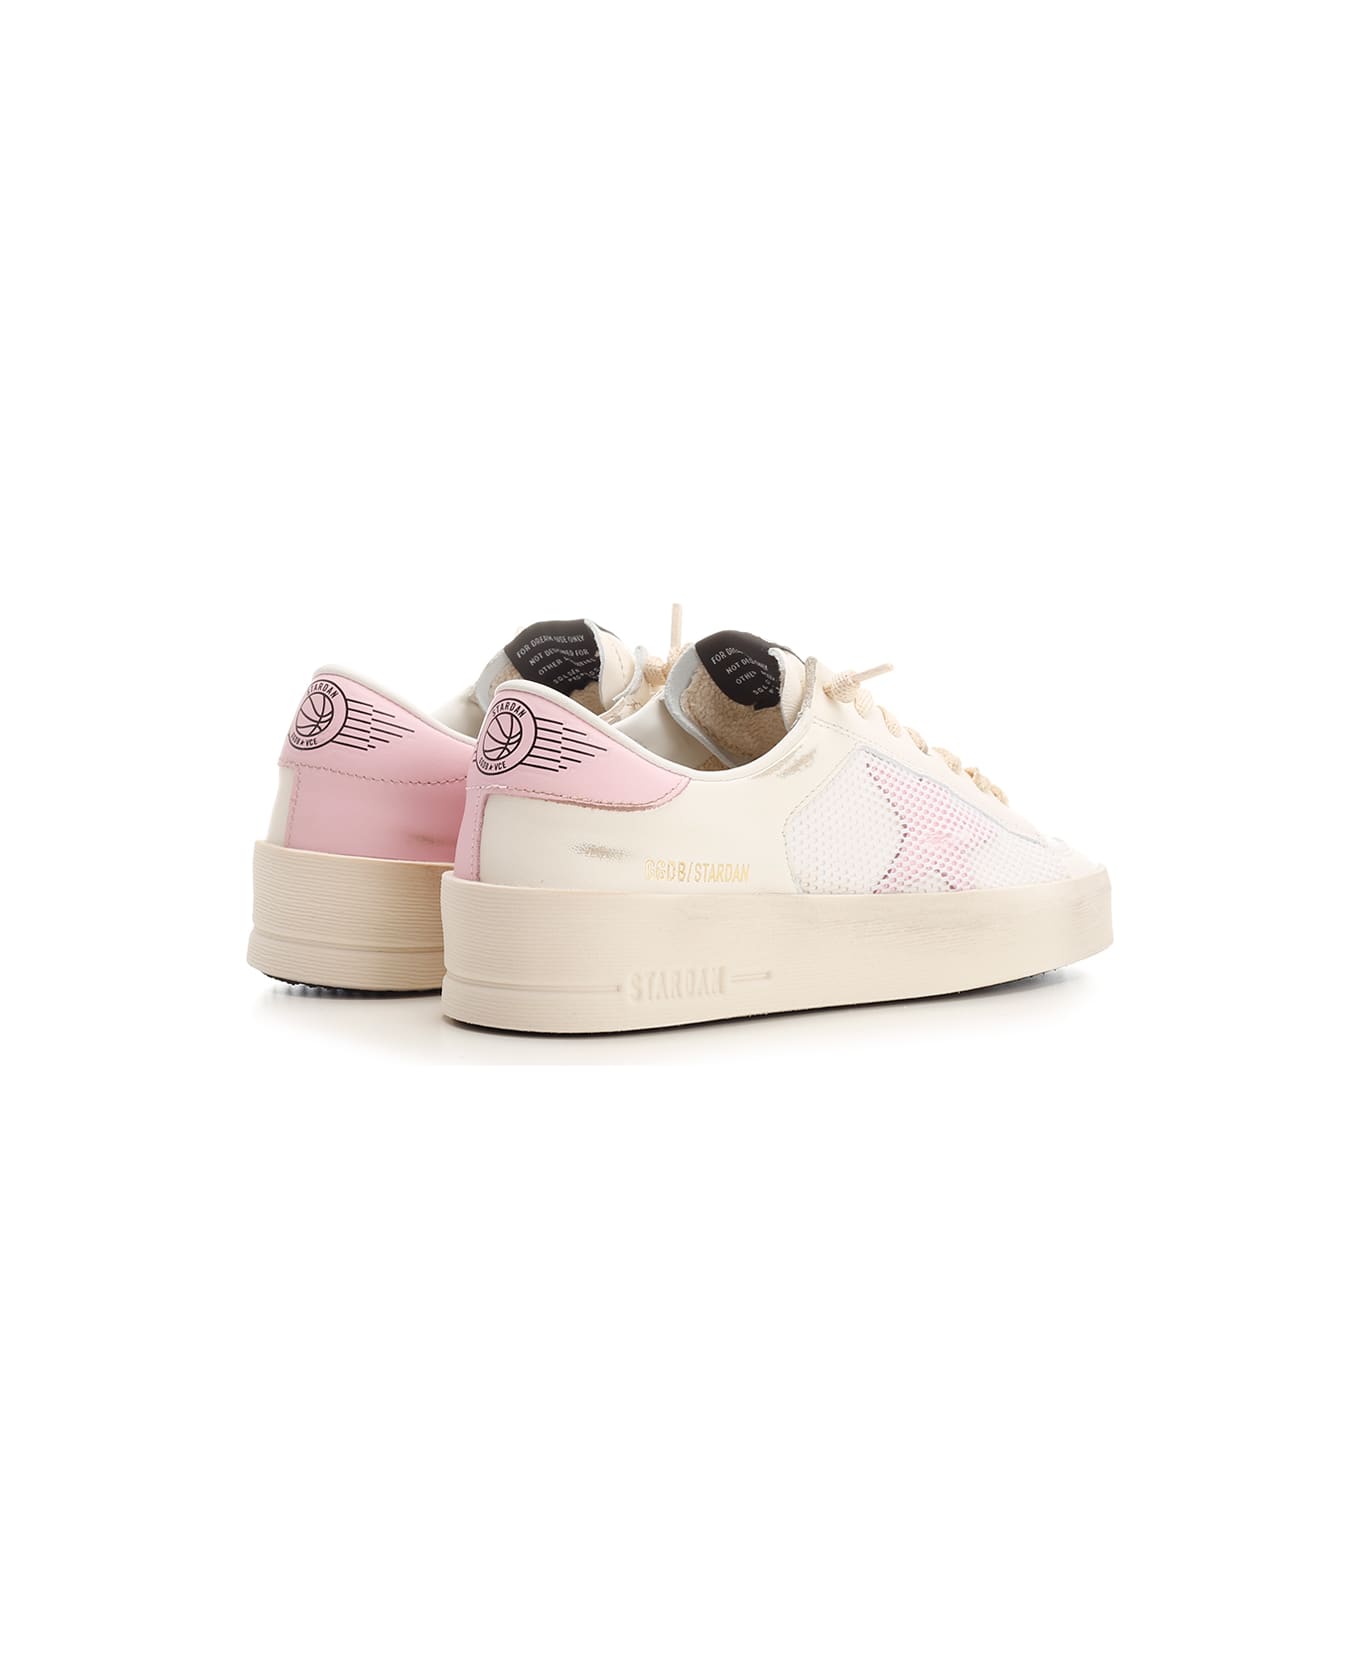 Golden Goose Stardan Mesh Sneakers - White/Orchid Pink スニーカー